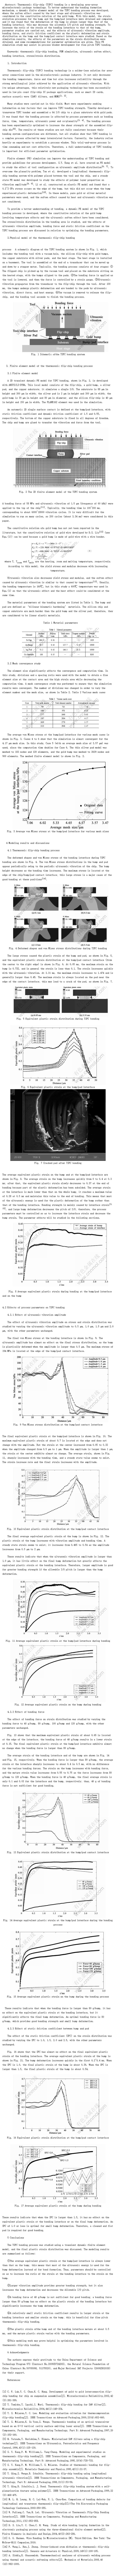 Modeling study of thermosonic flip-chip bonding process